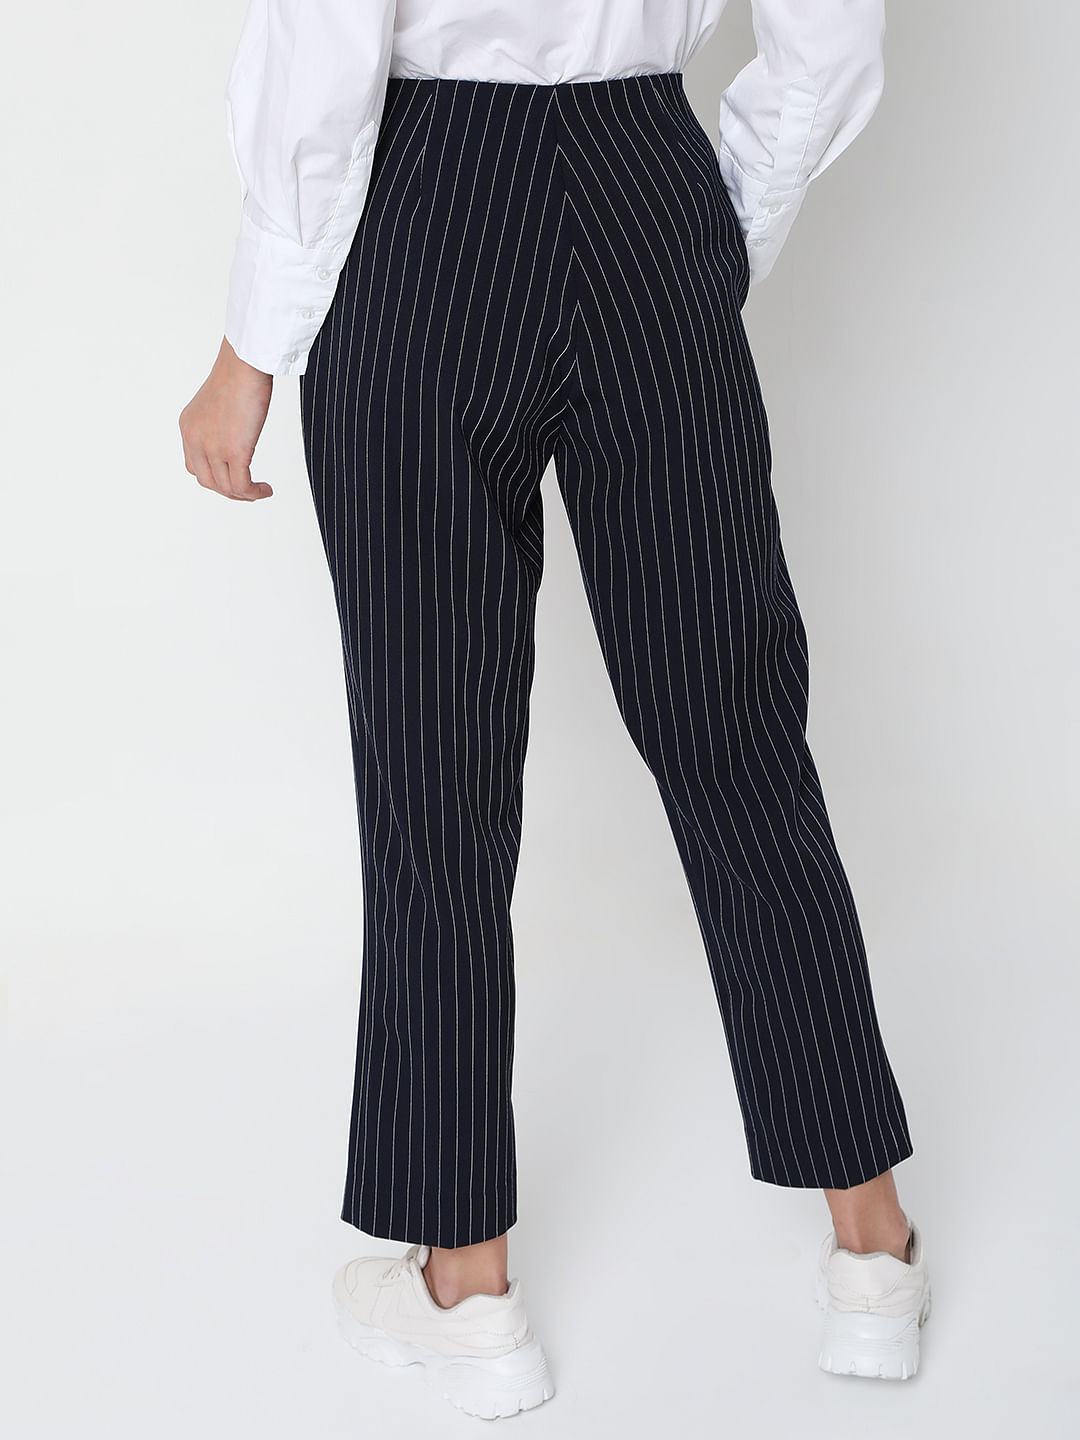 Buy Grey striped trouser pants in chanderi Designer Wear  Ensemble